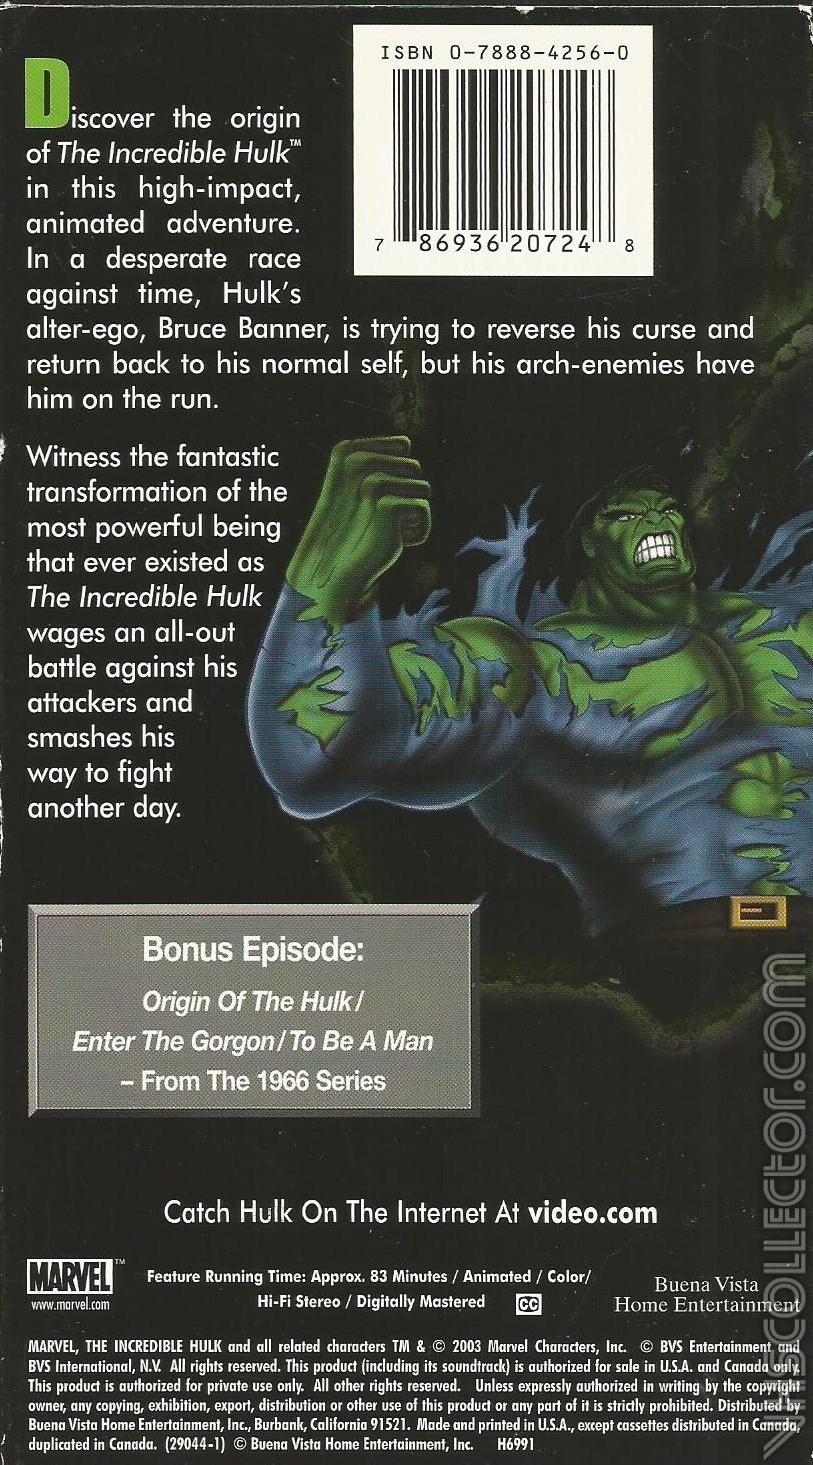 The Incredible Hulk | VHSCollector.com